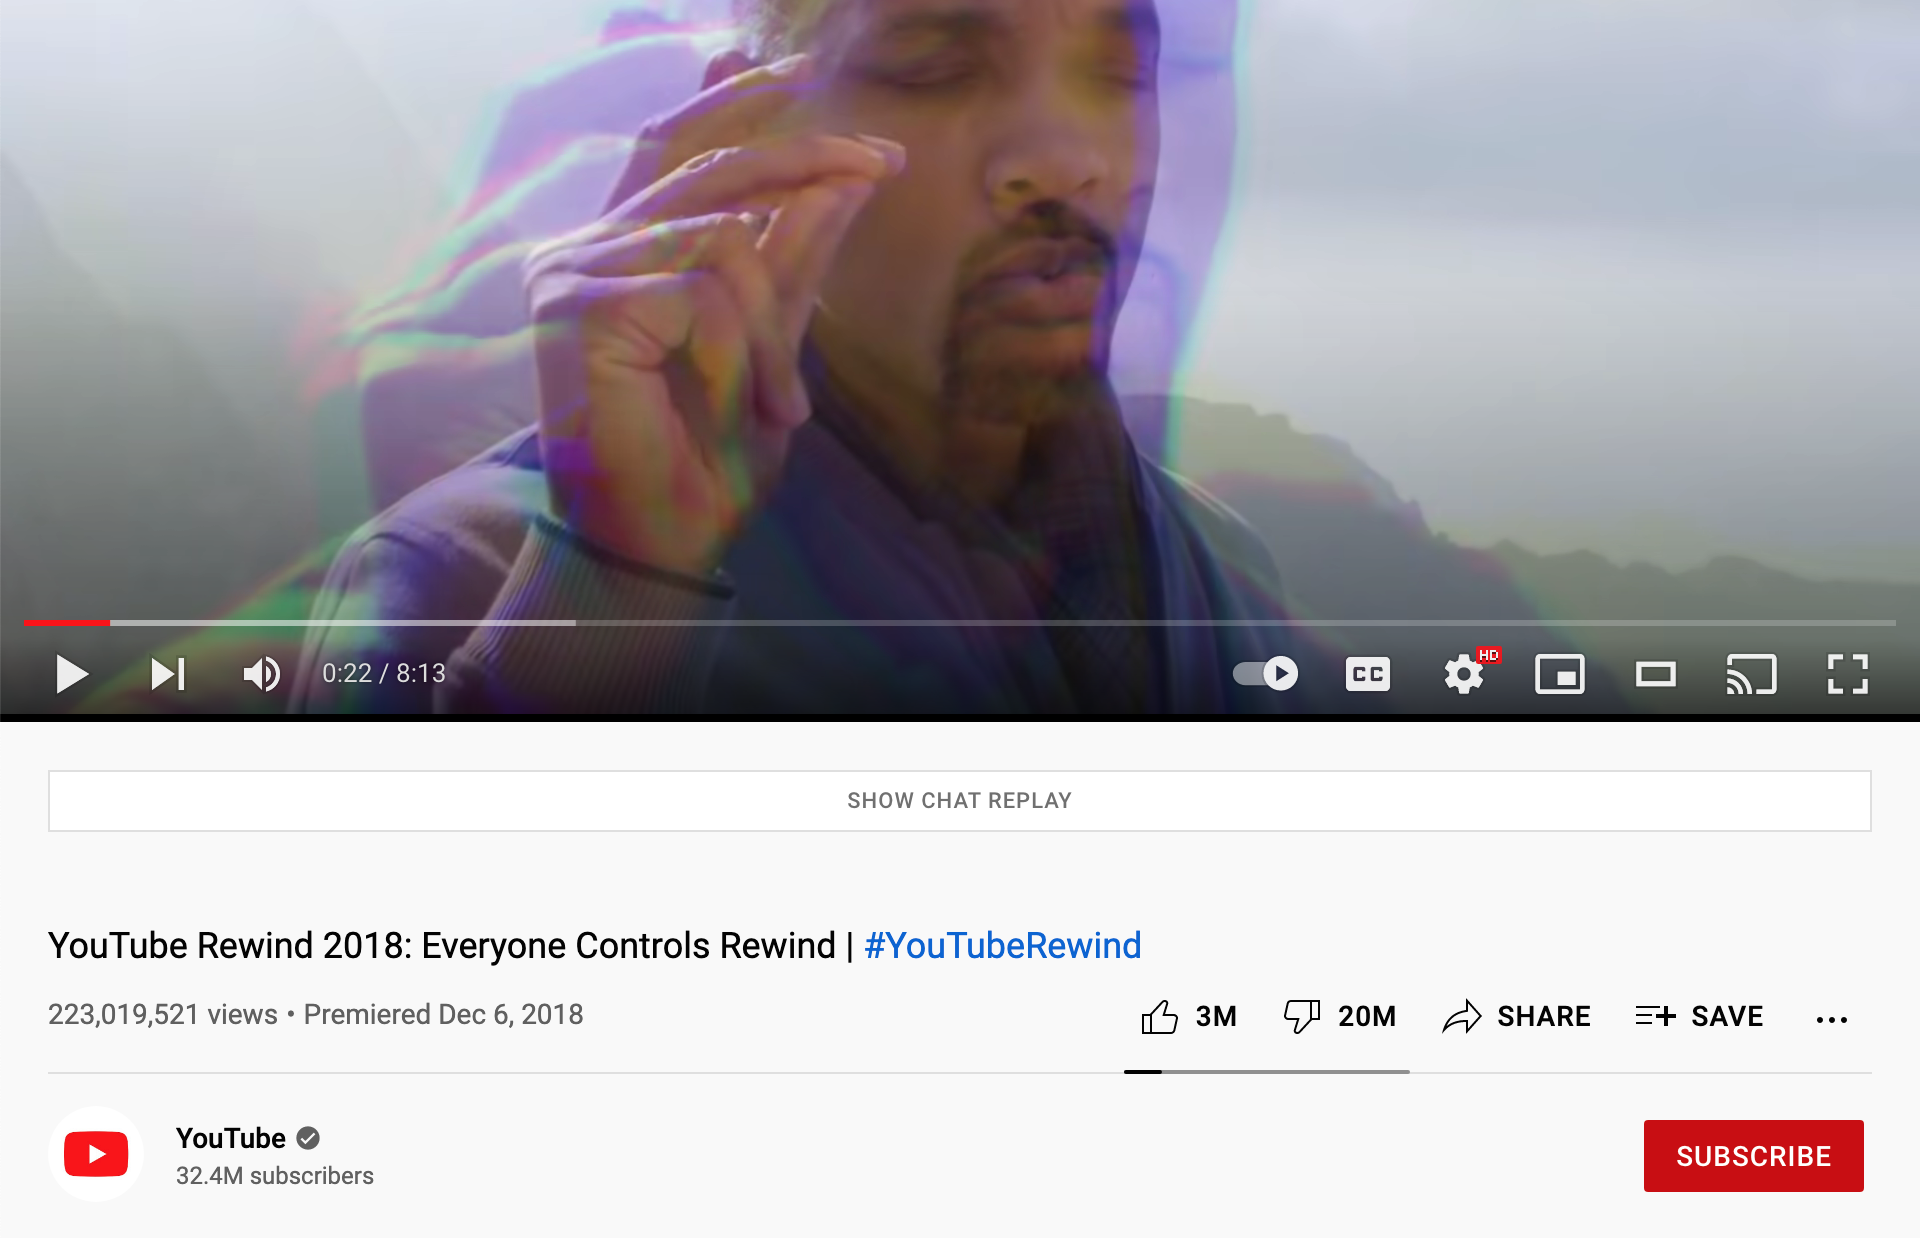 YouTube Rewind 2018's like to dislike ratio